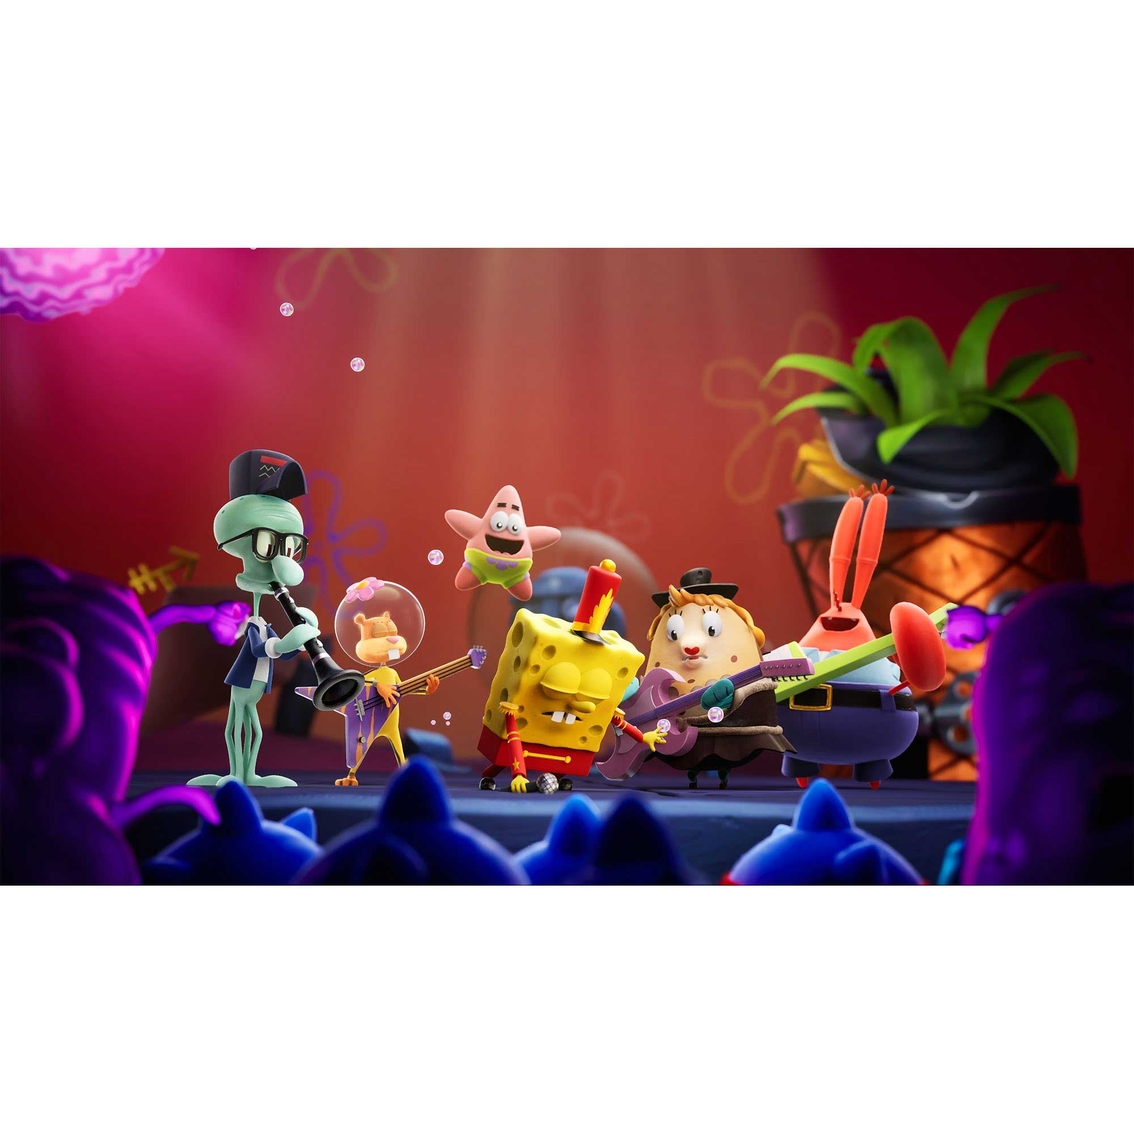 SpongeBob SquarePants: The Cosmic Shake (Xbox One) - Image 7 of 10